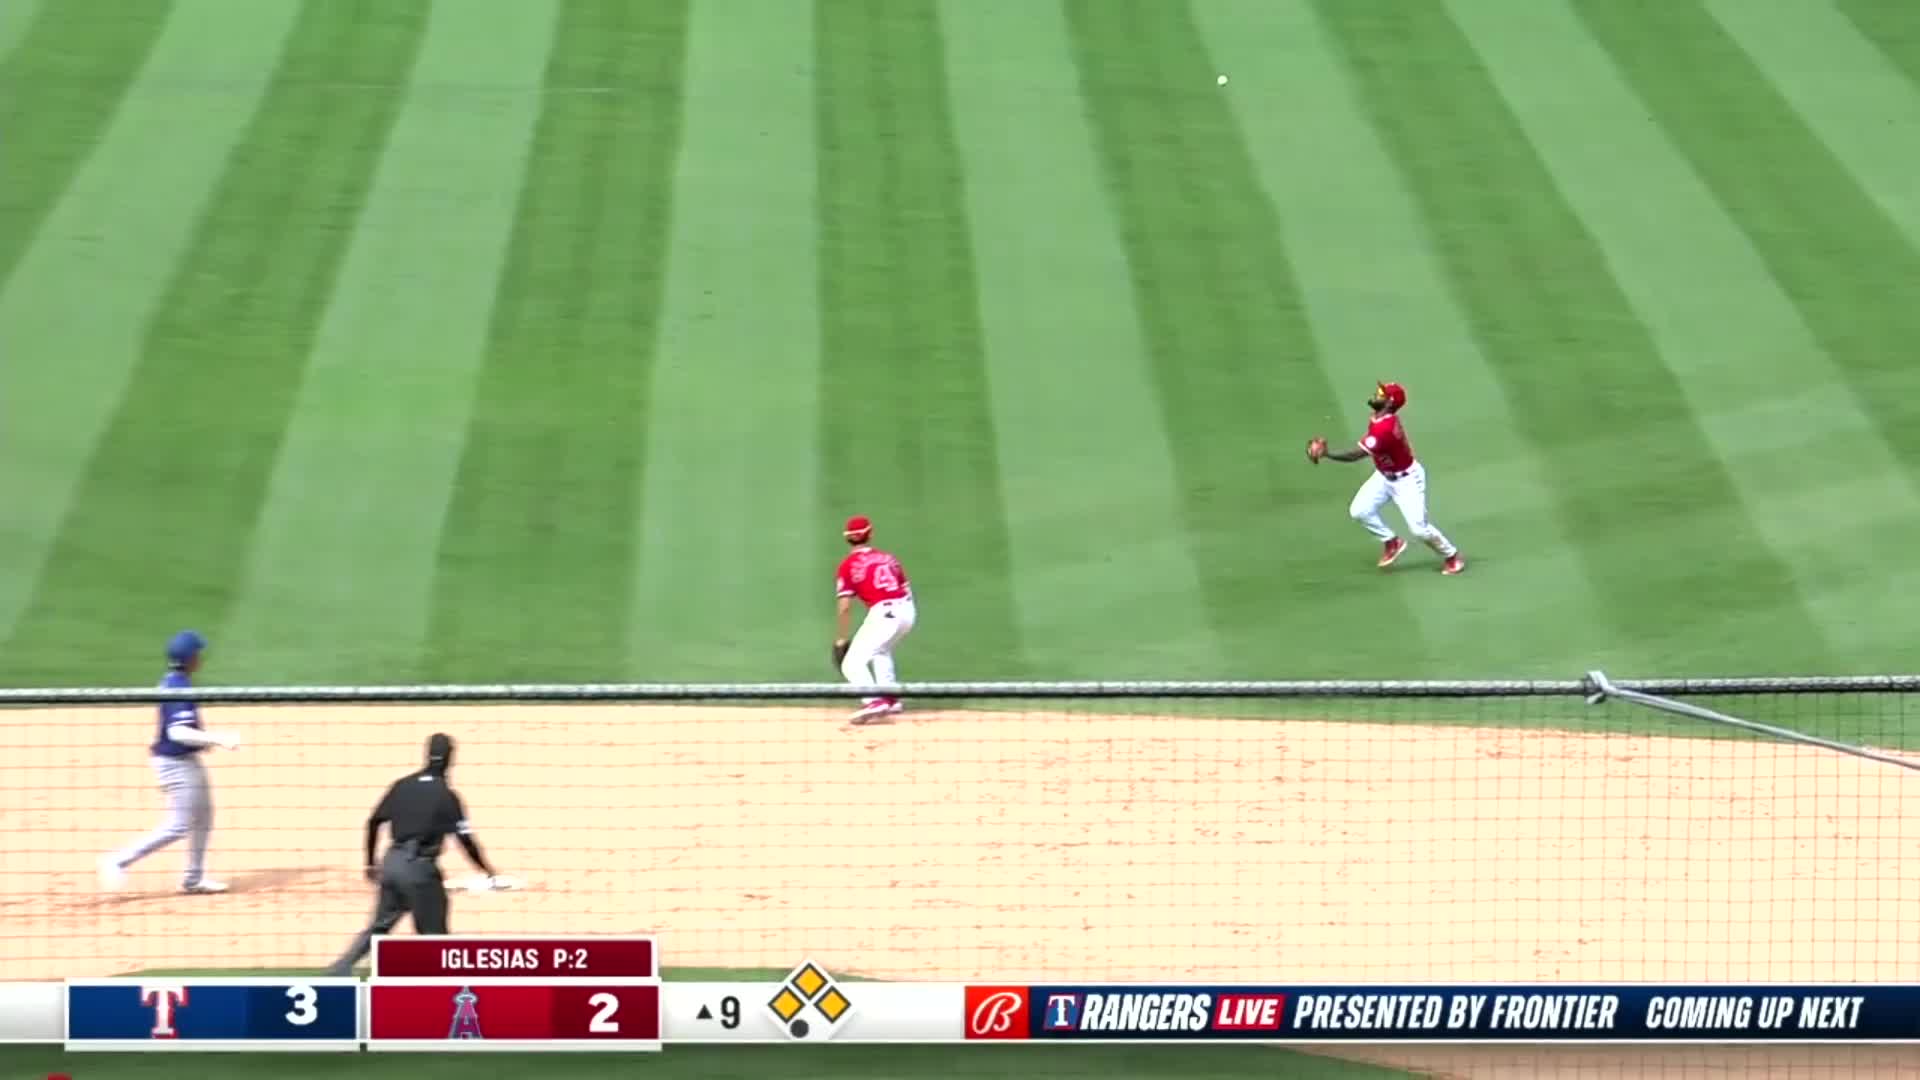 Jorge Mateo hits a little league dong : r/baseball